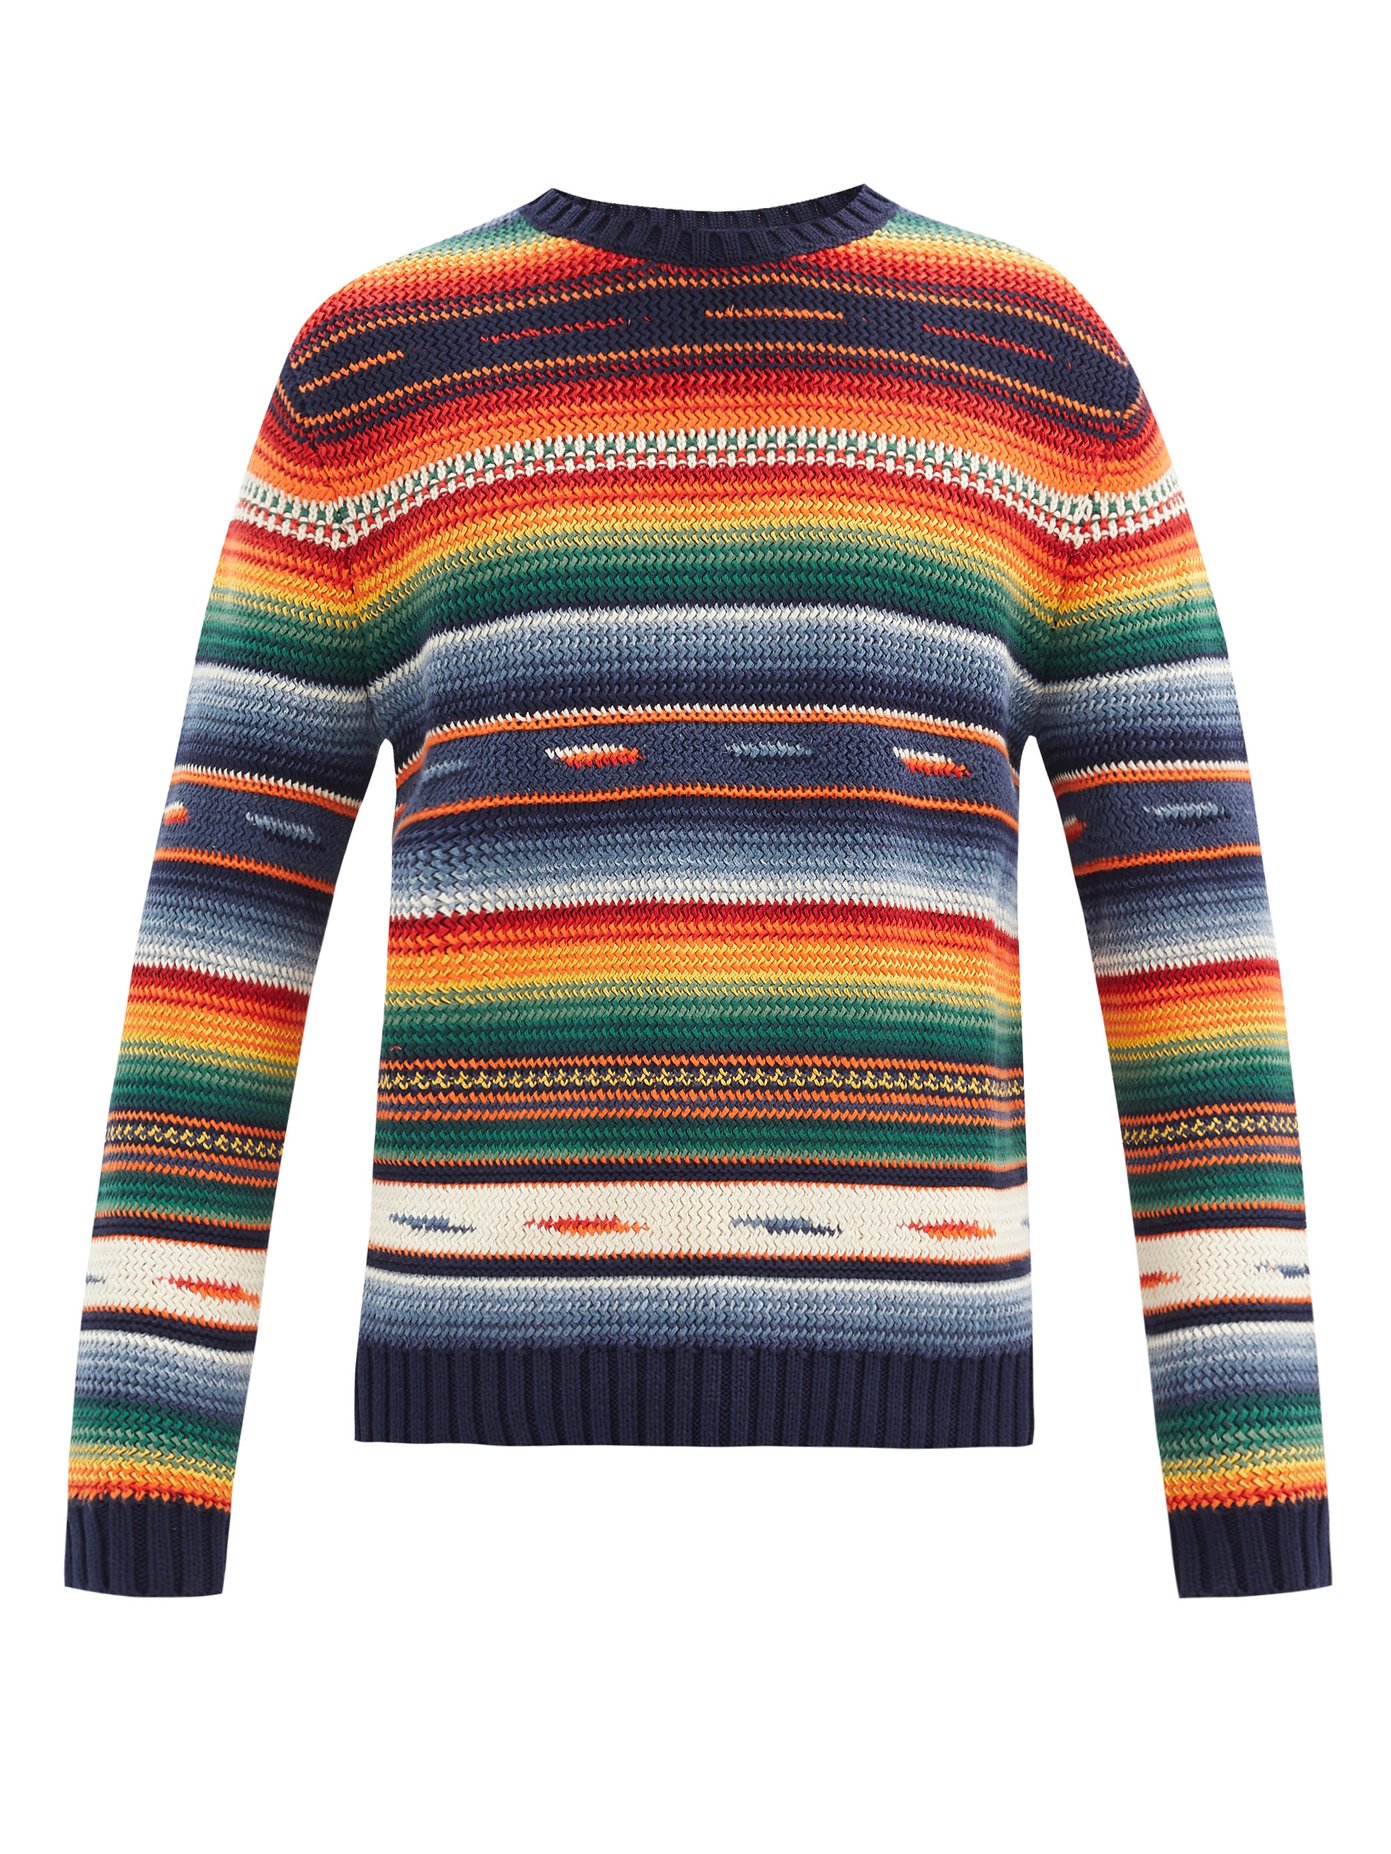 polo ralph lauren striped sweater